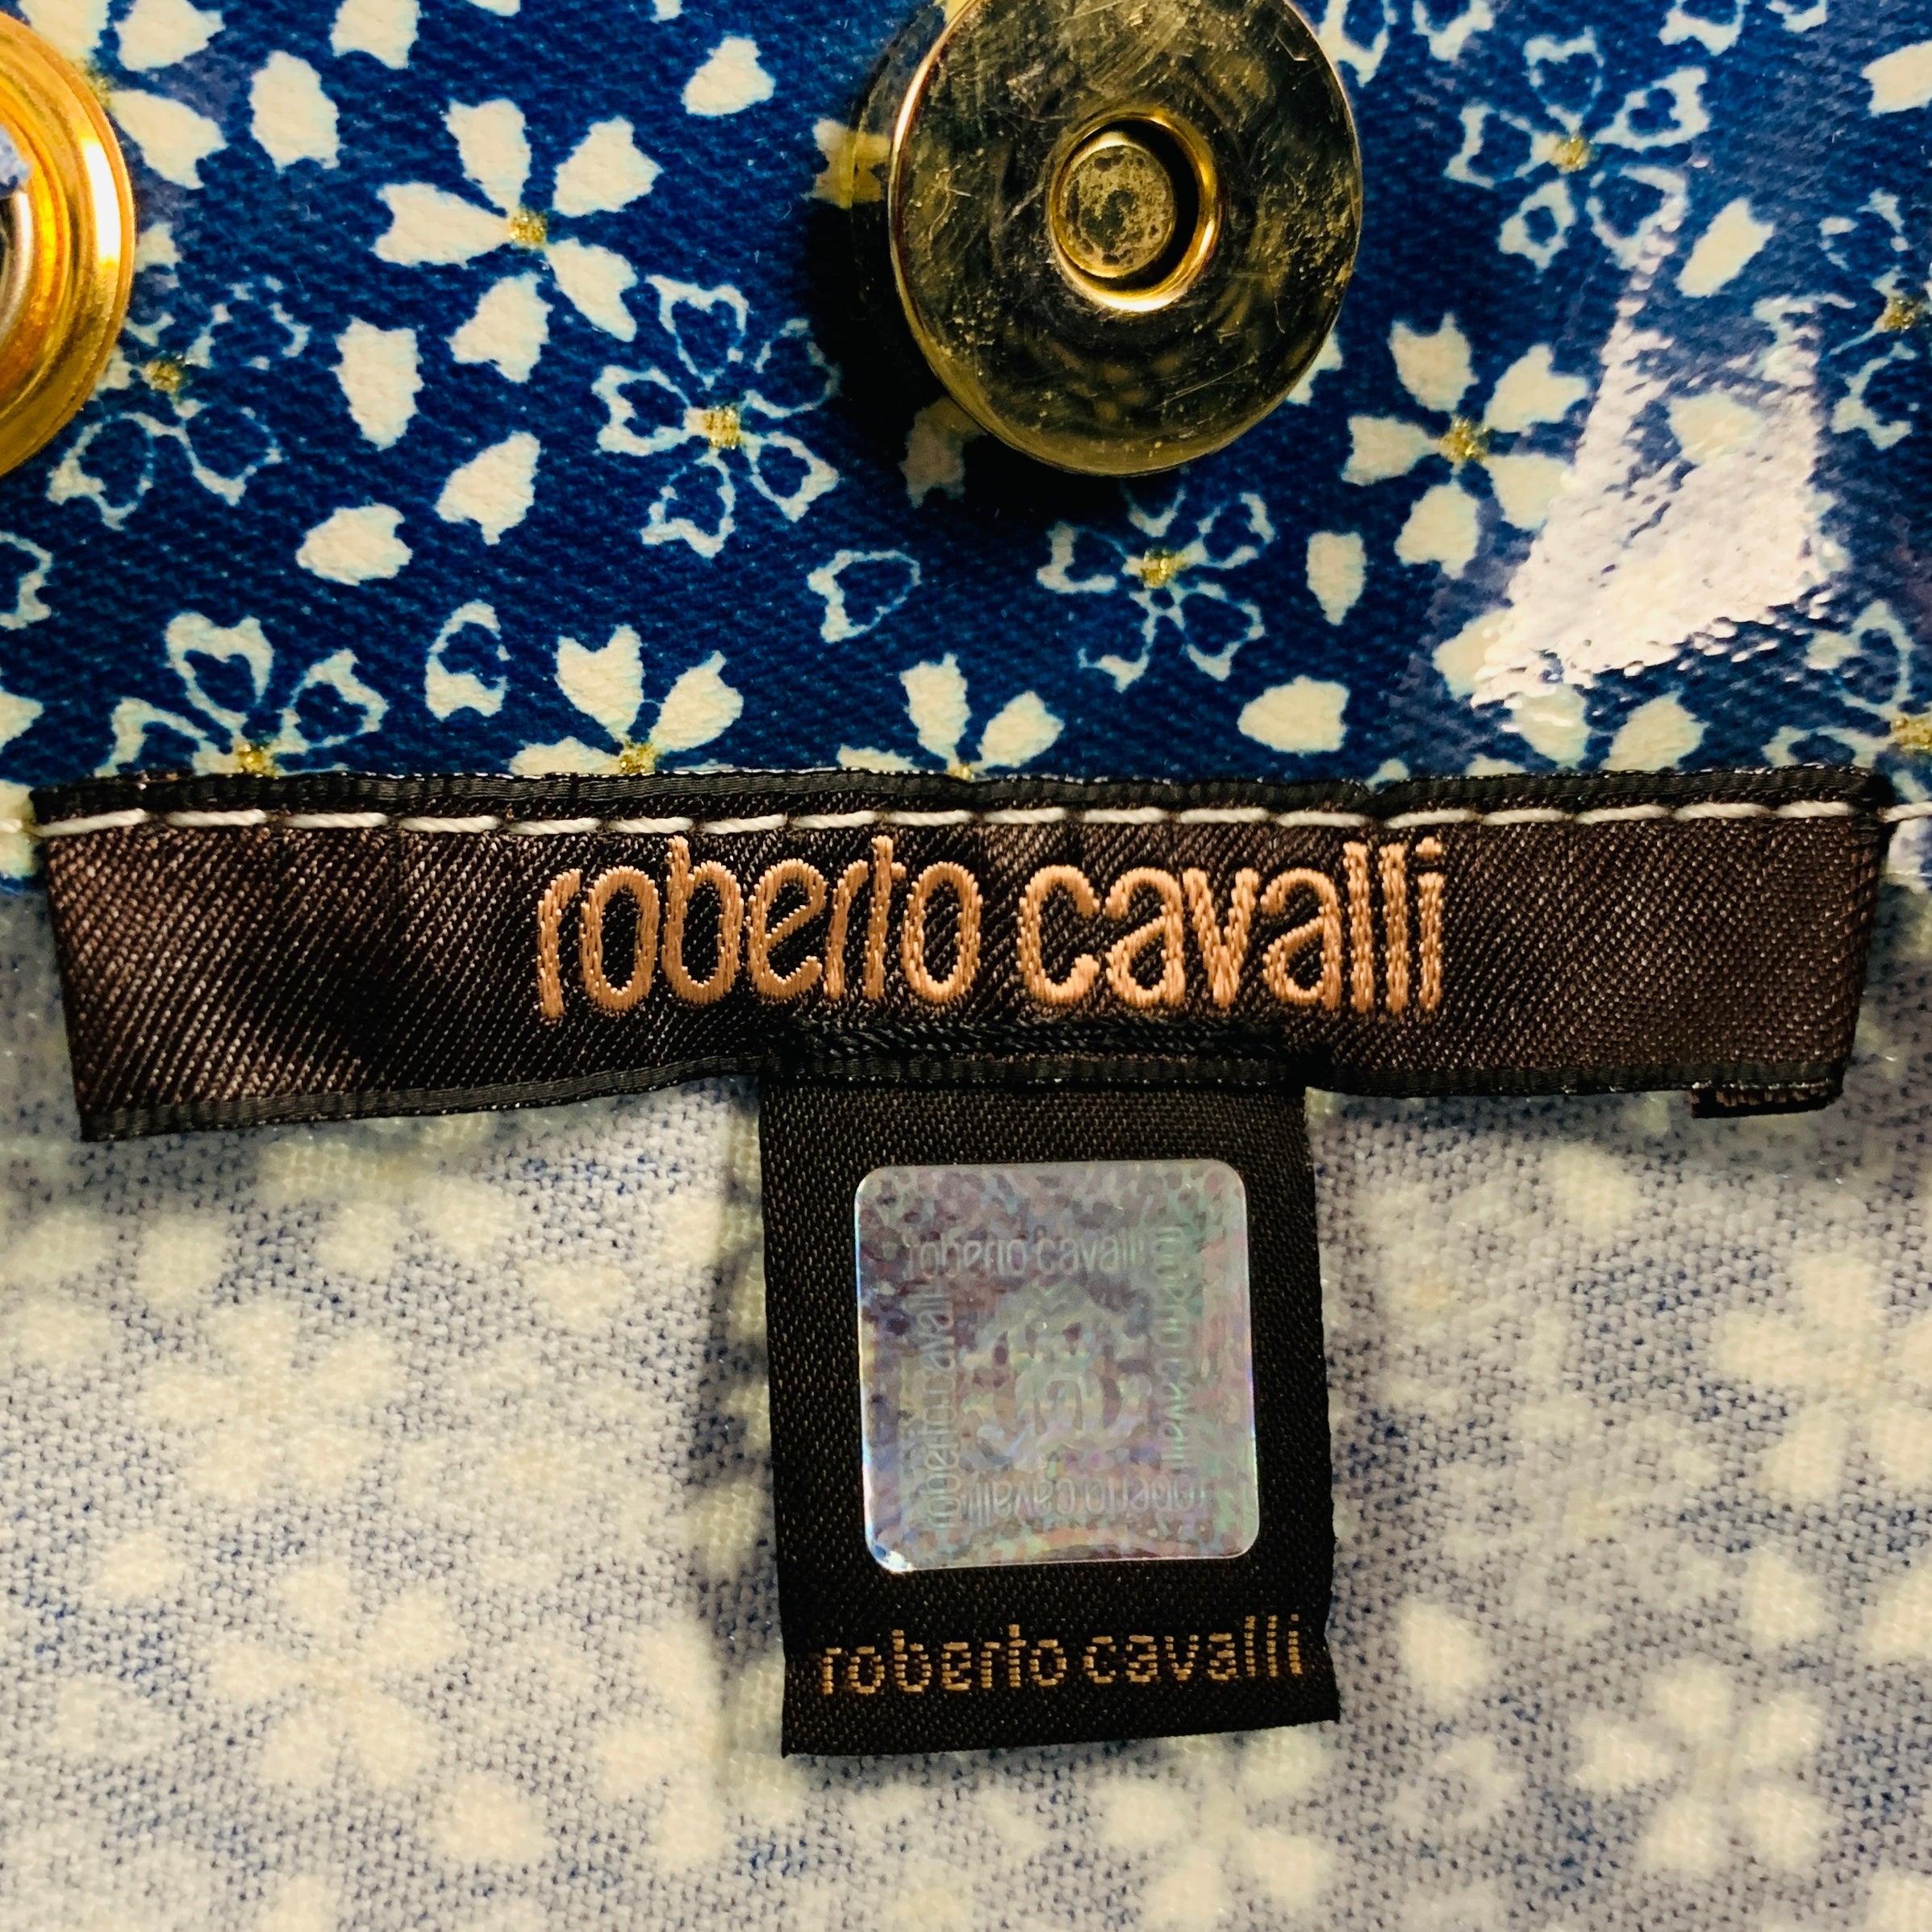 ROBERTO CAVALLI Blue White Floral Tote Handbag 3